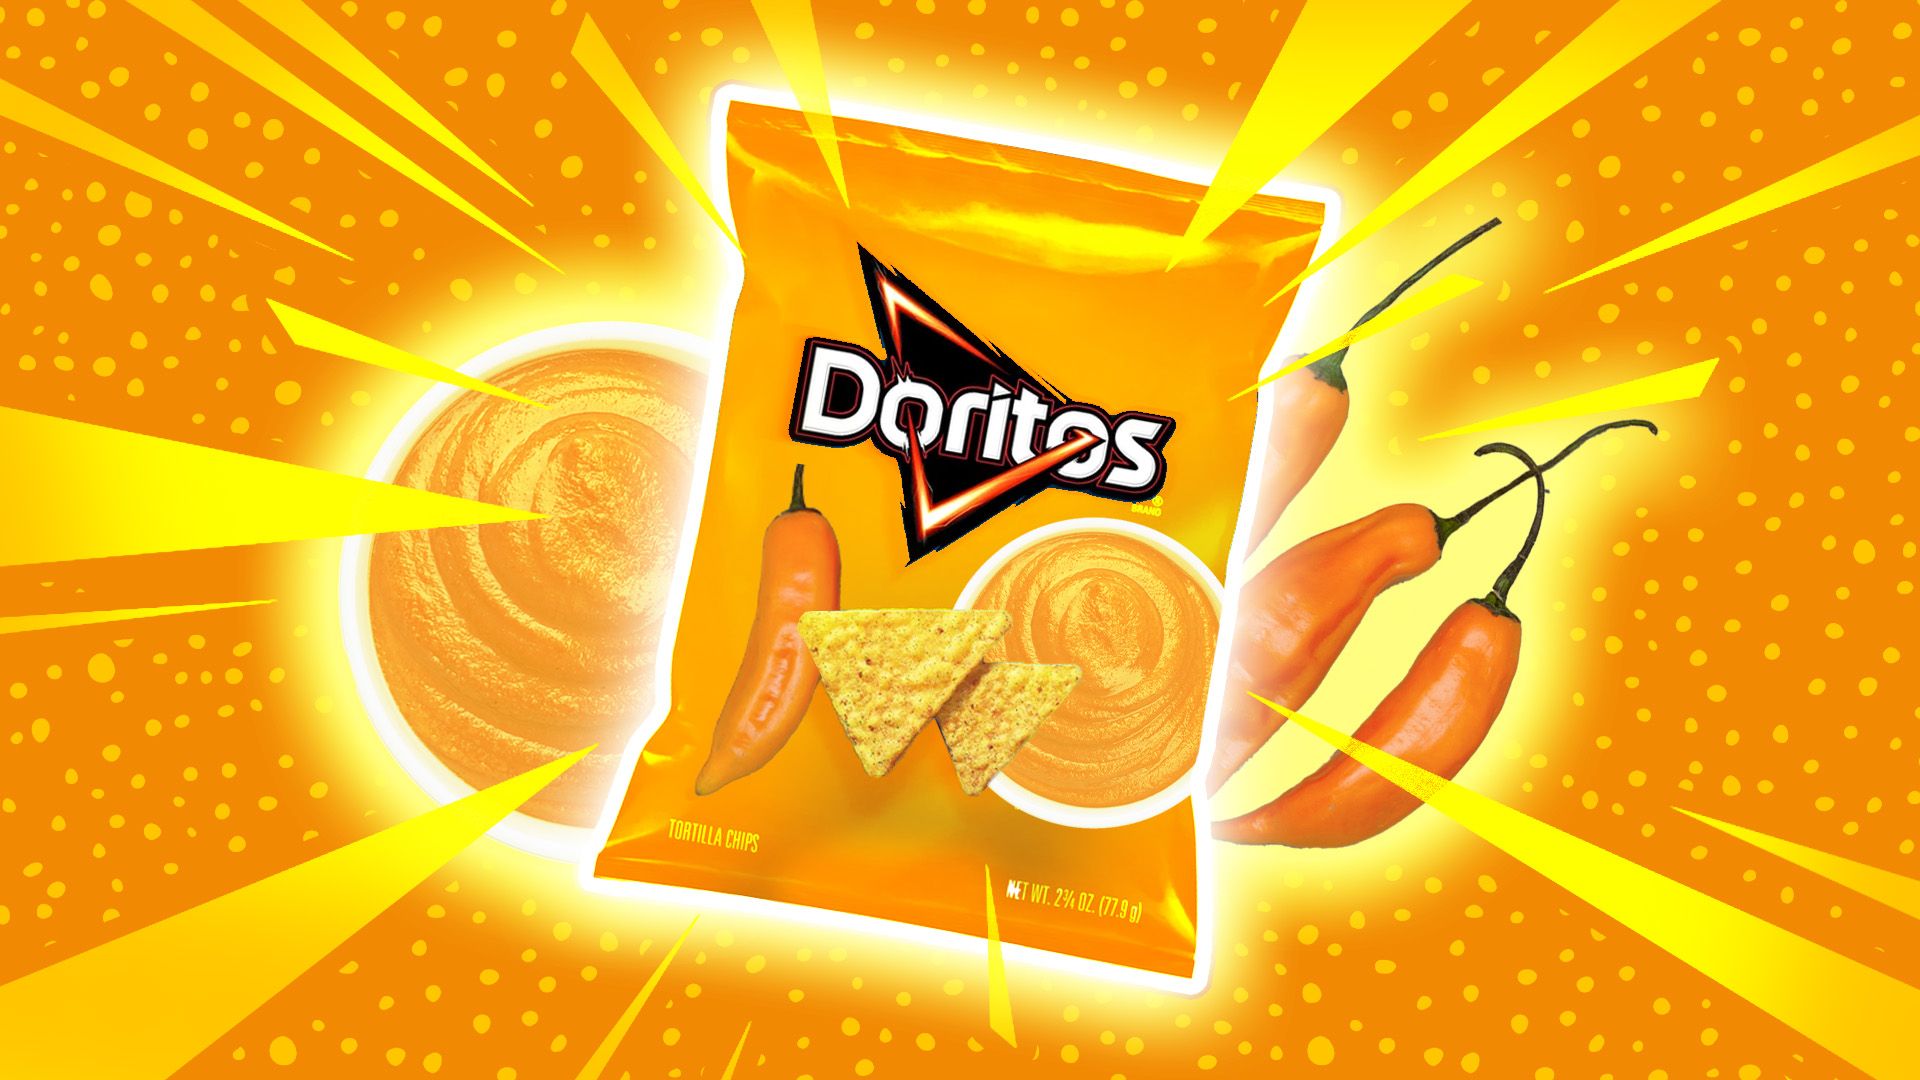 A bag of Doritos with a chili flavor on a yellow background - Doritos